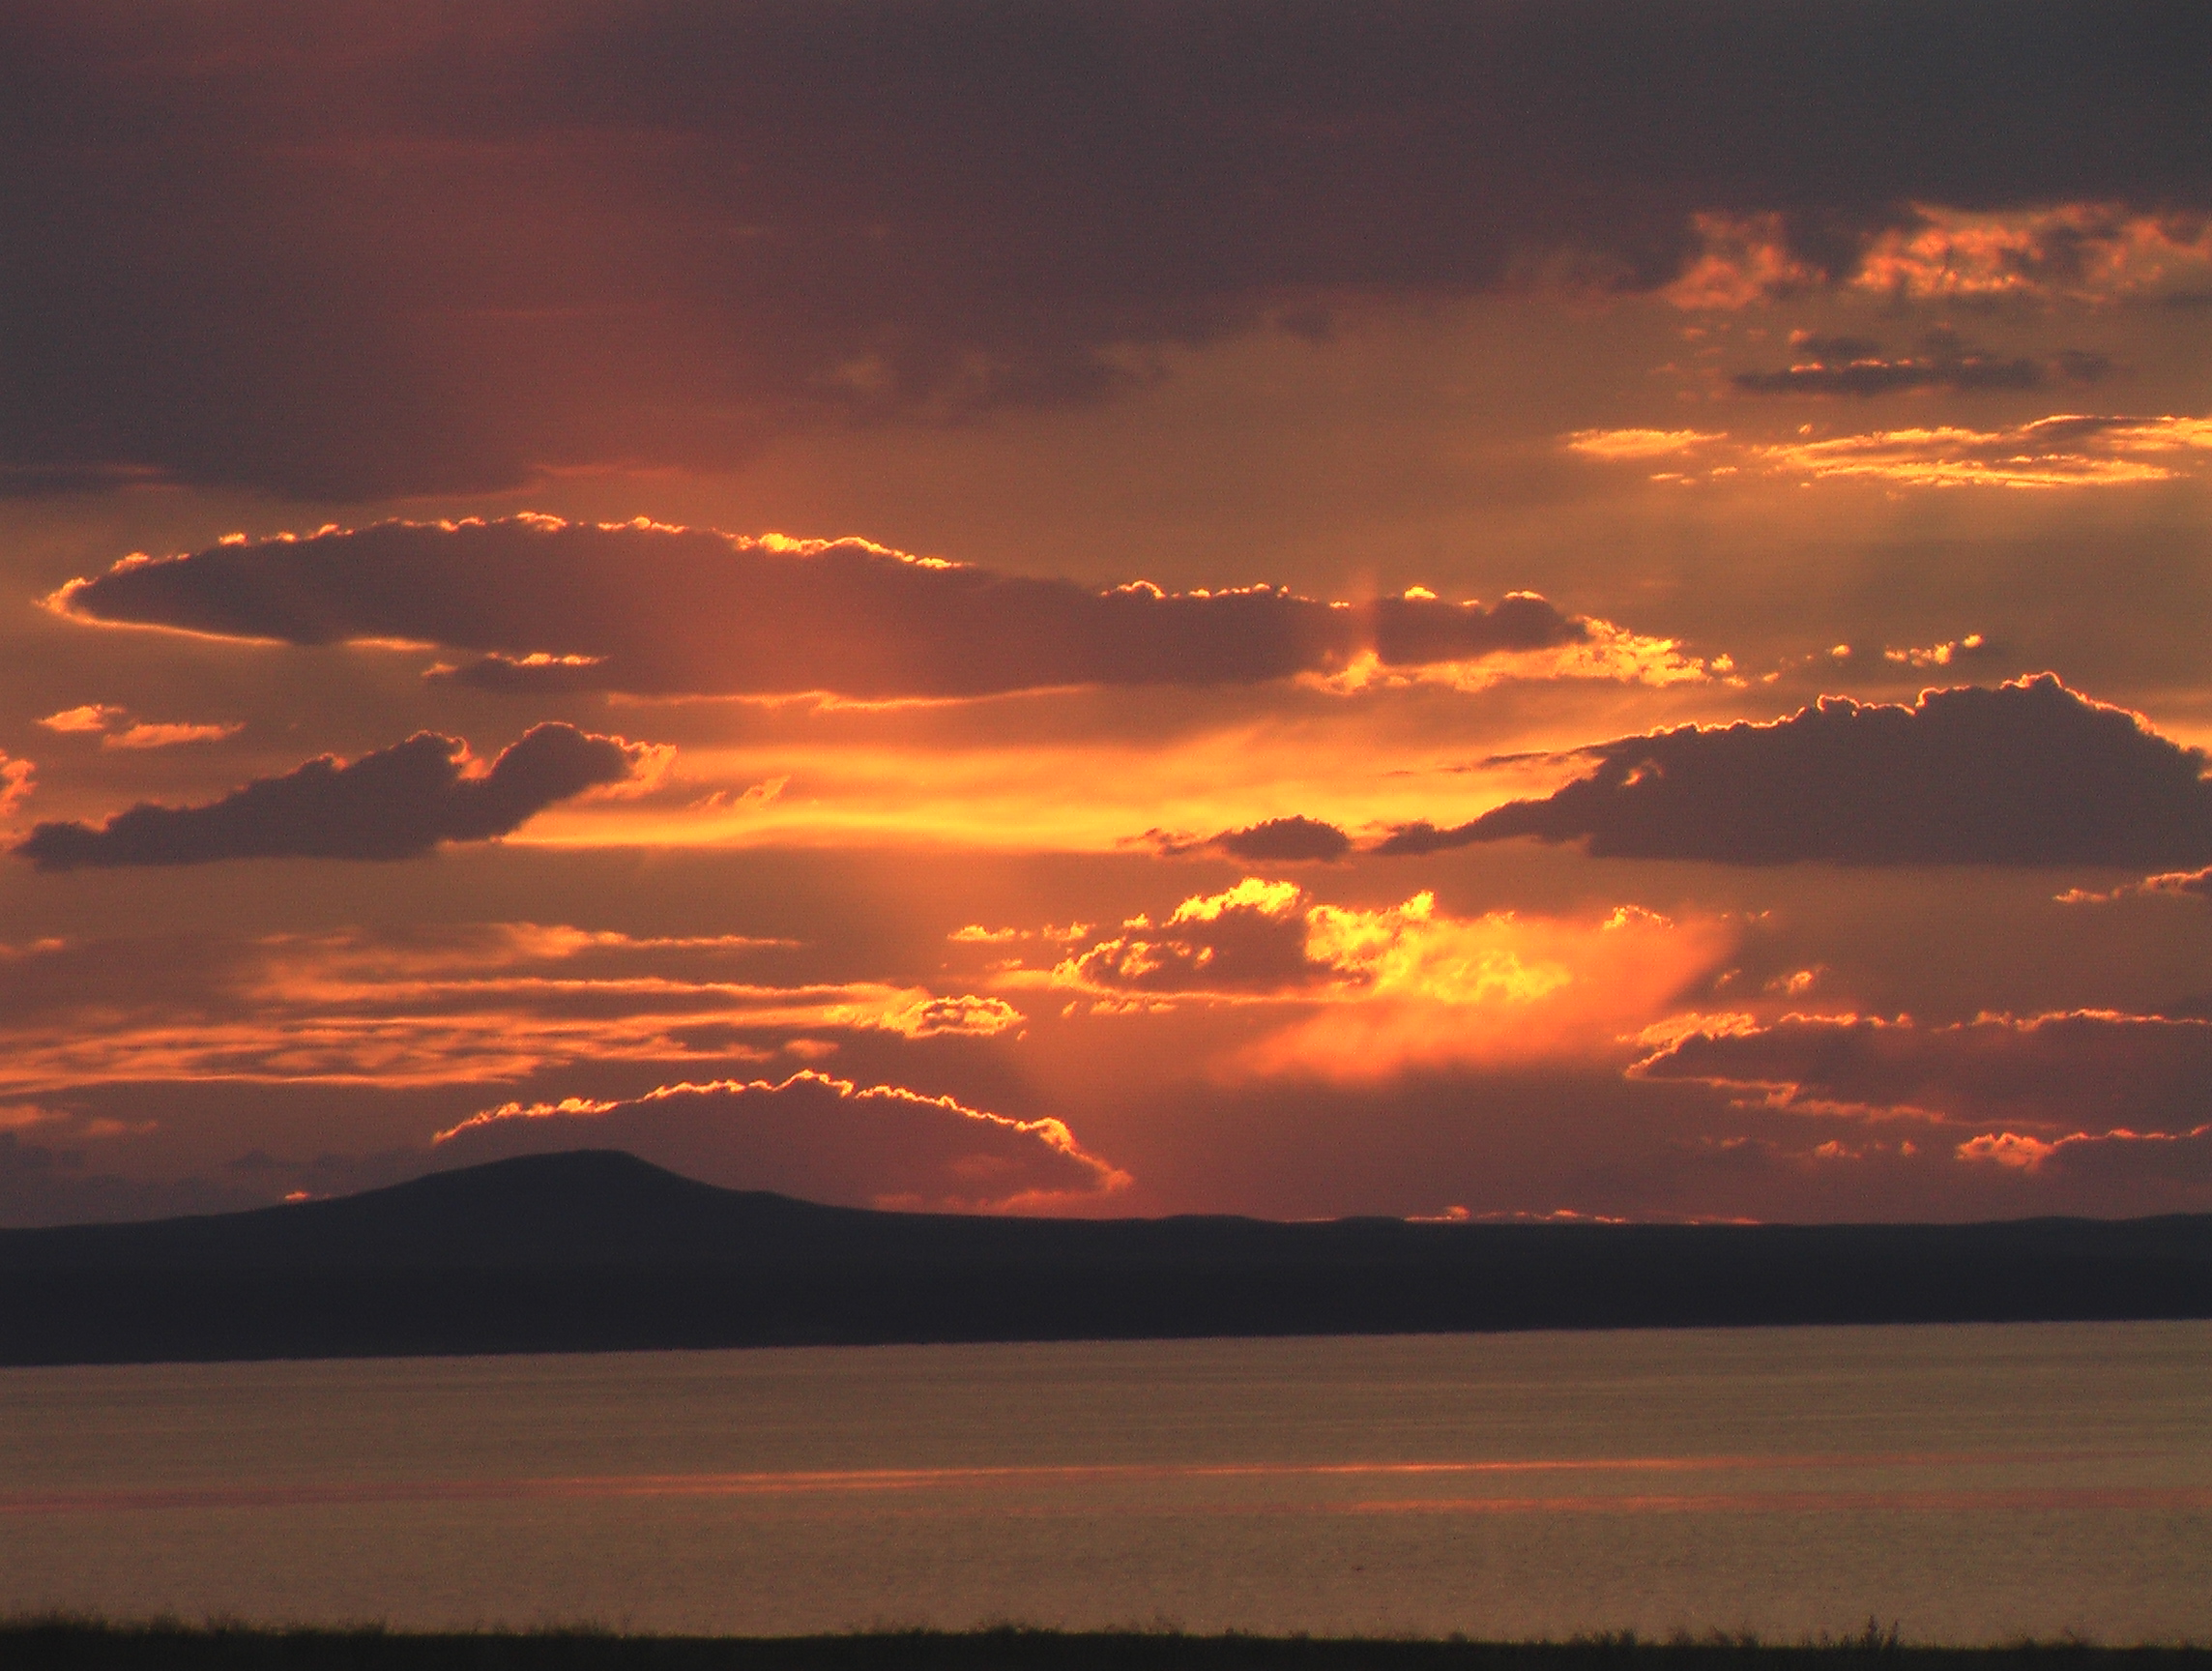 Khar-Nuur lake, Khovd province, Western Mongolia sunset1